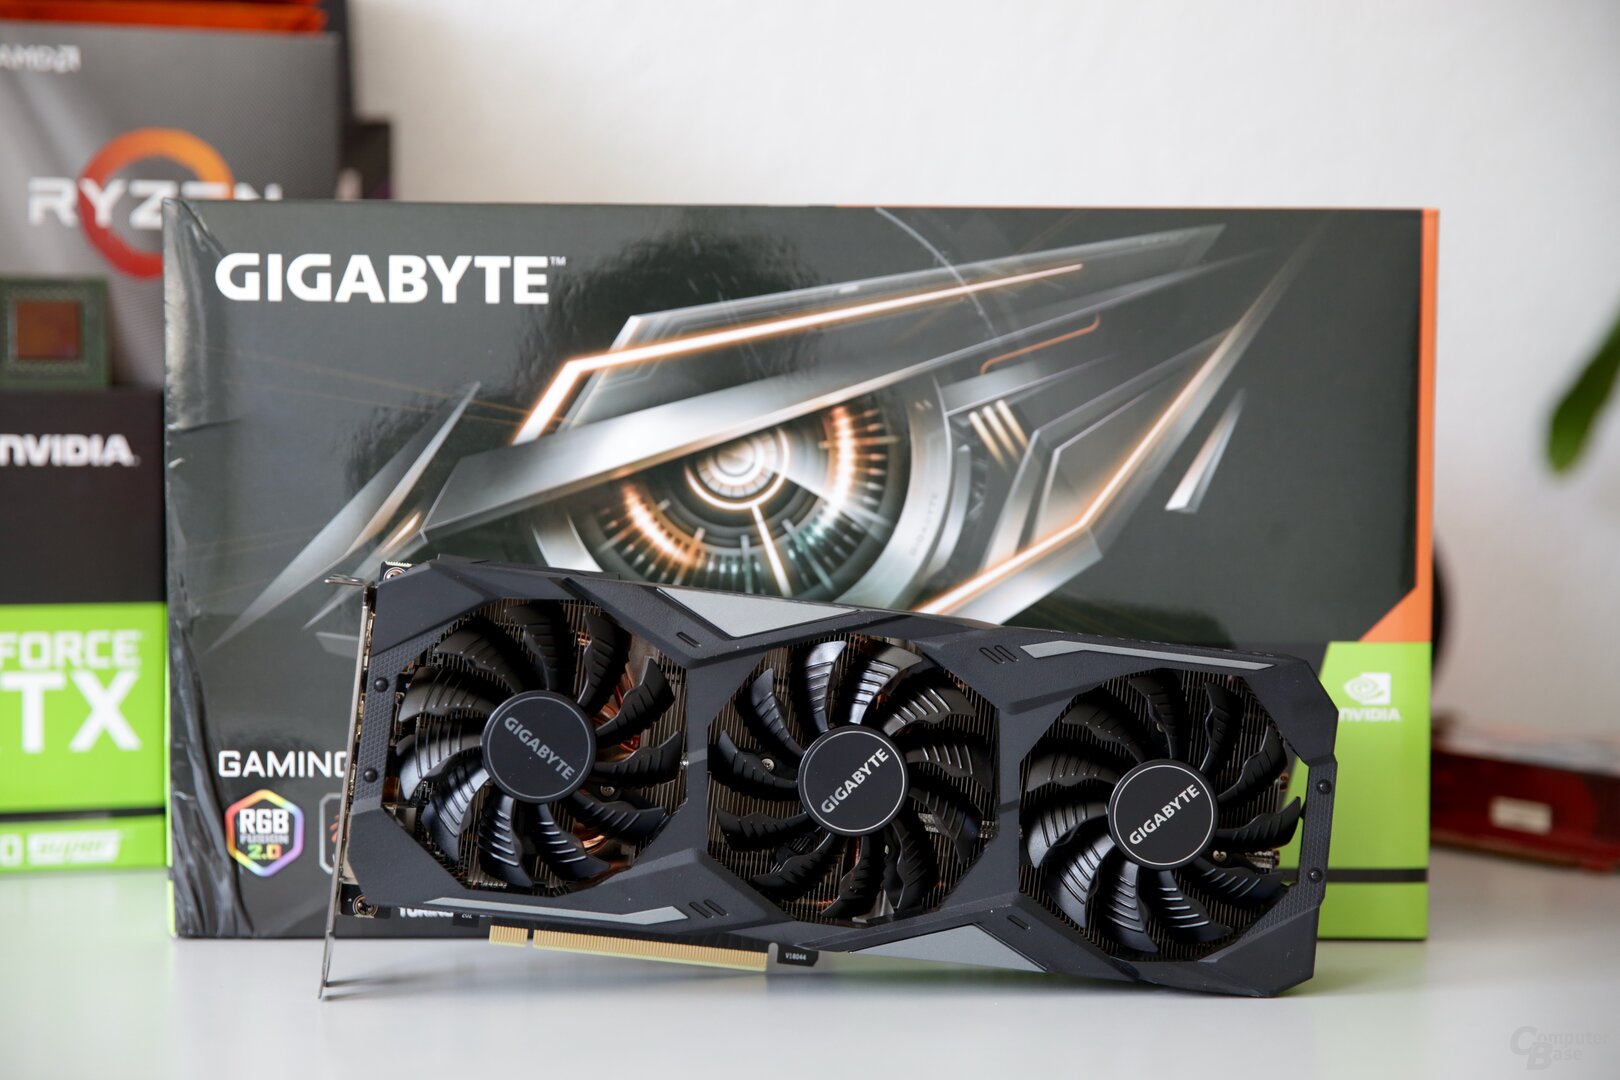 Gigabyte GeForce RTX 2070 Super Gaming OC in the test